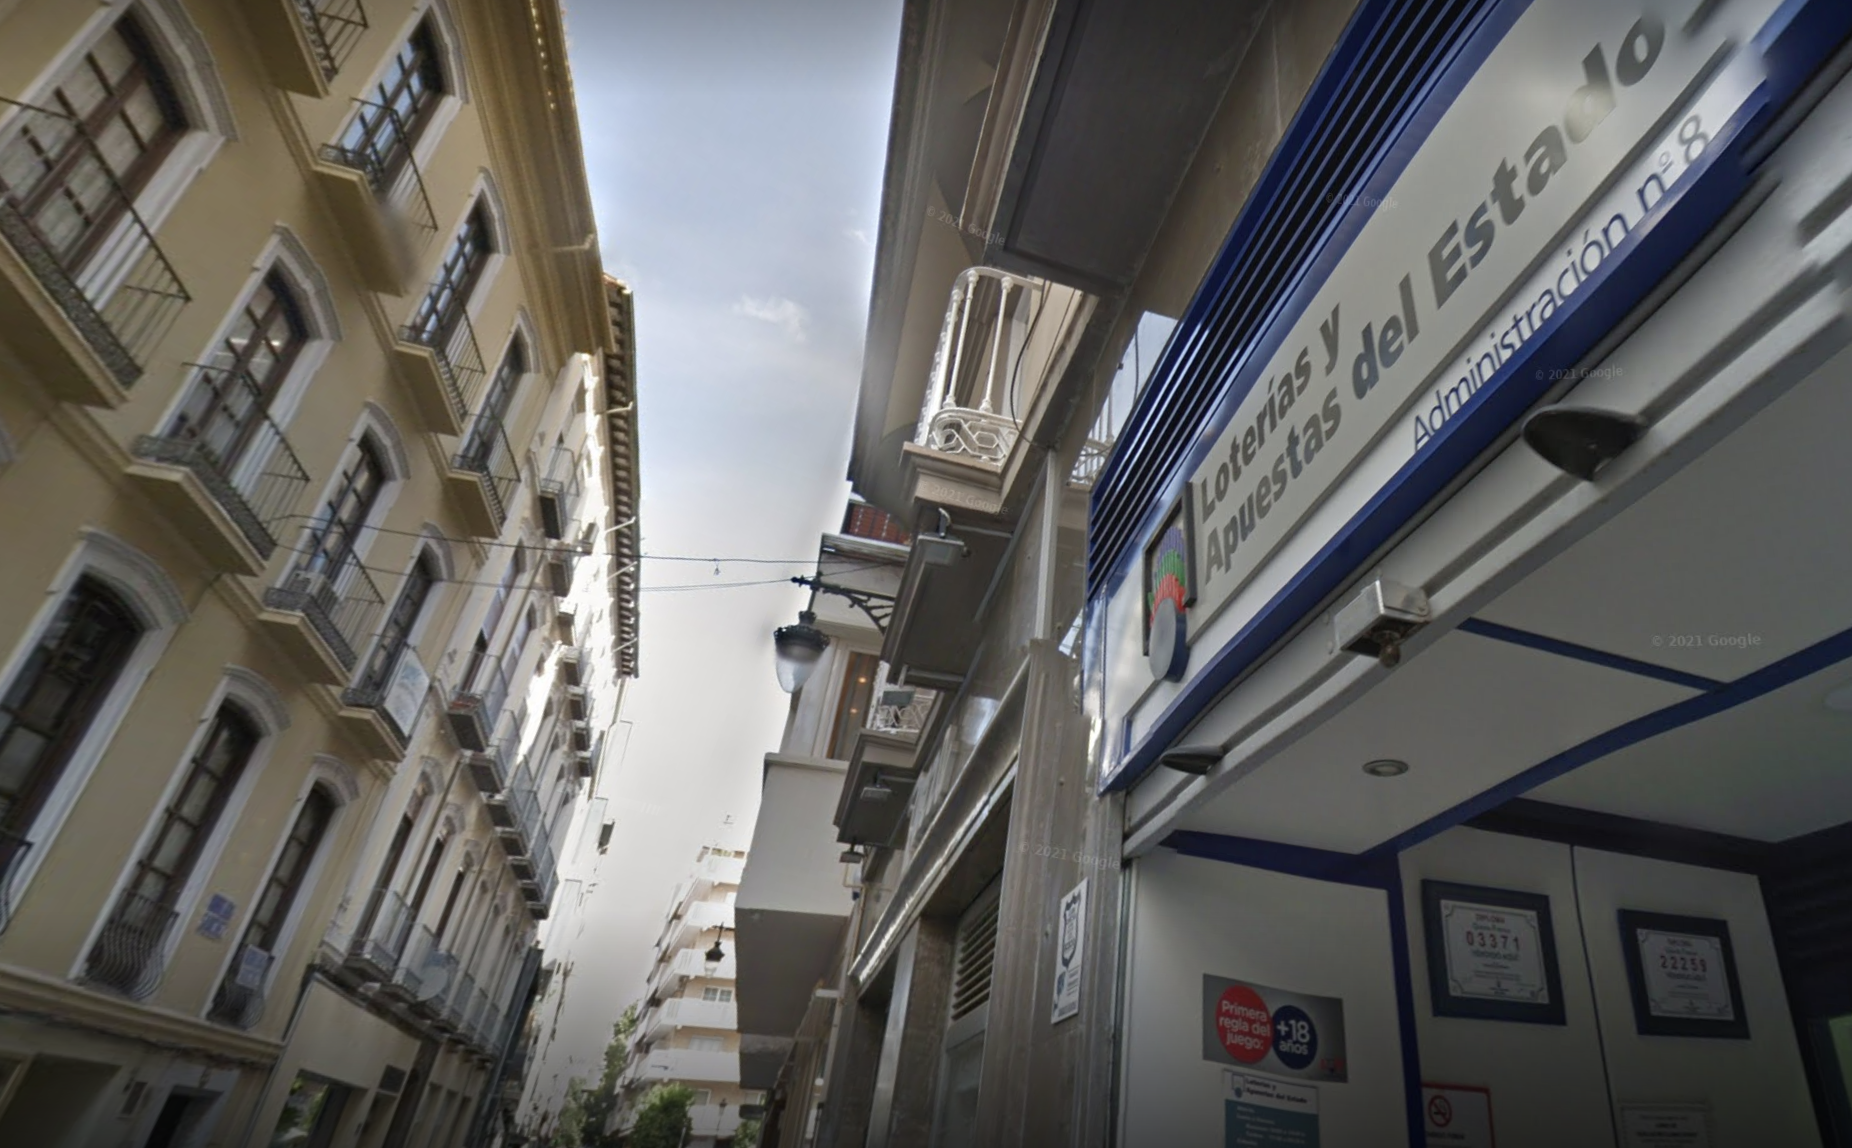 Administración de Loterías número 8 de Granada, donde se selló el boleto de Euromillones. GOOGLE MAPS